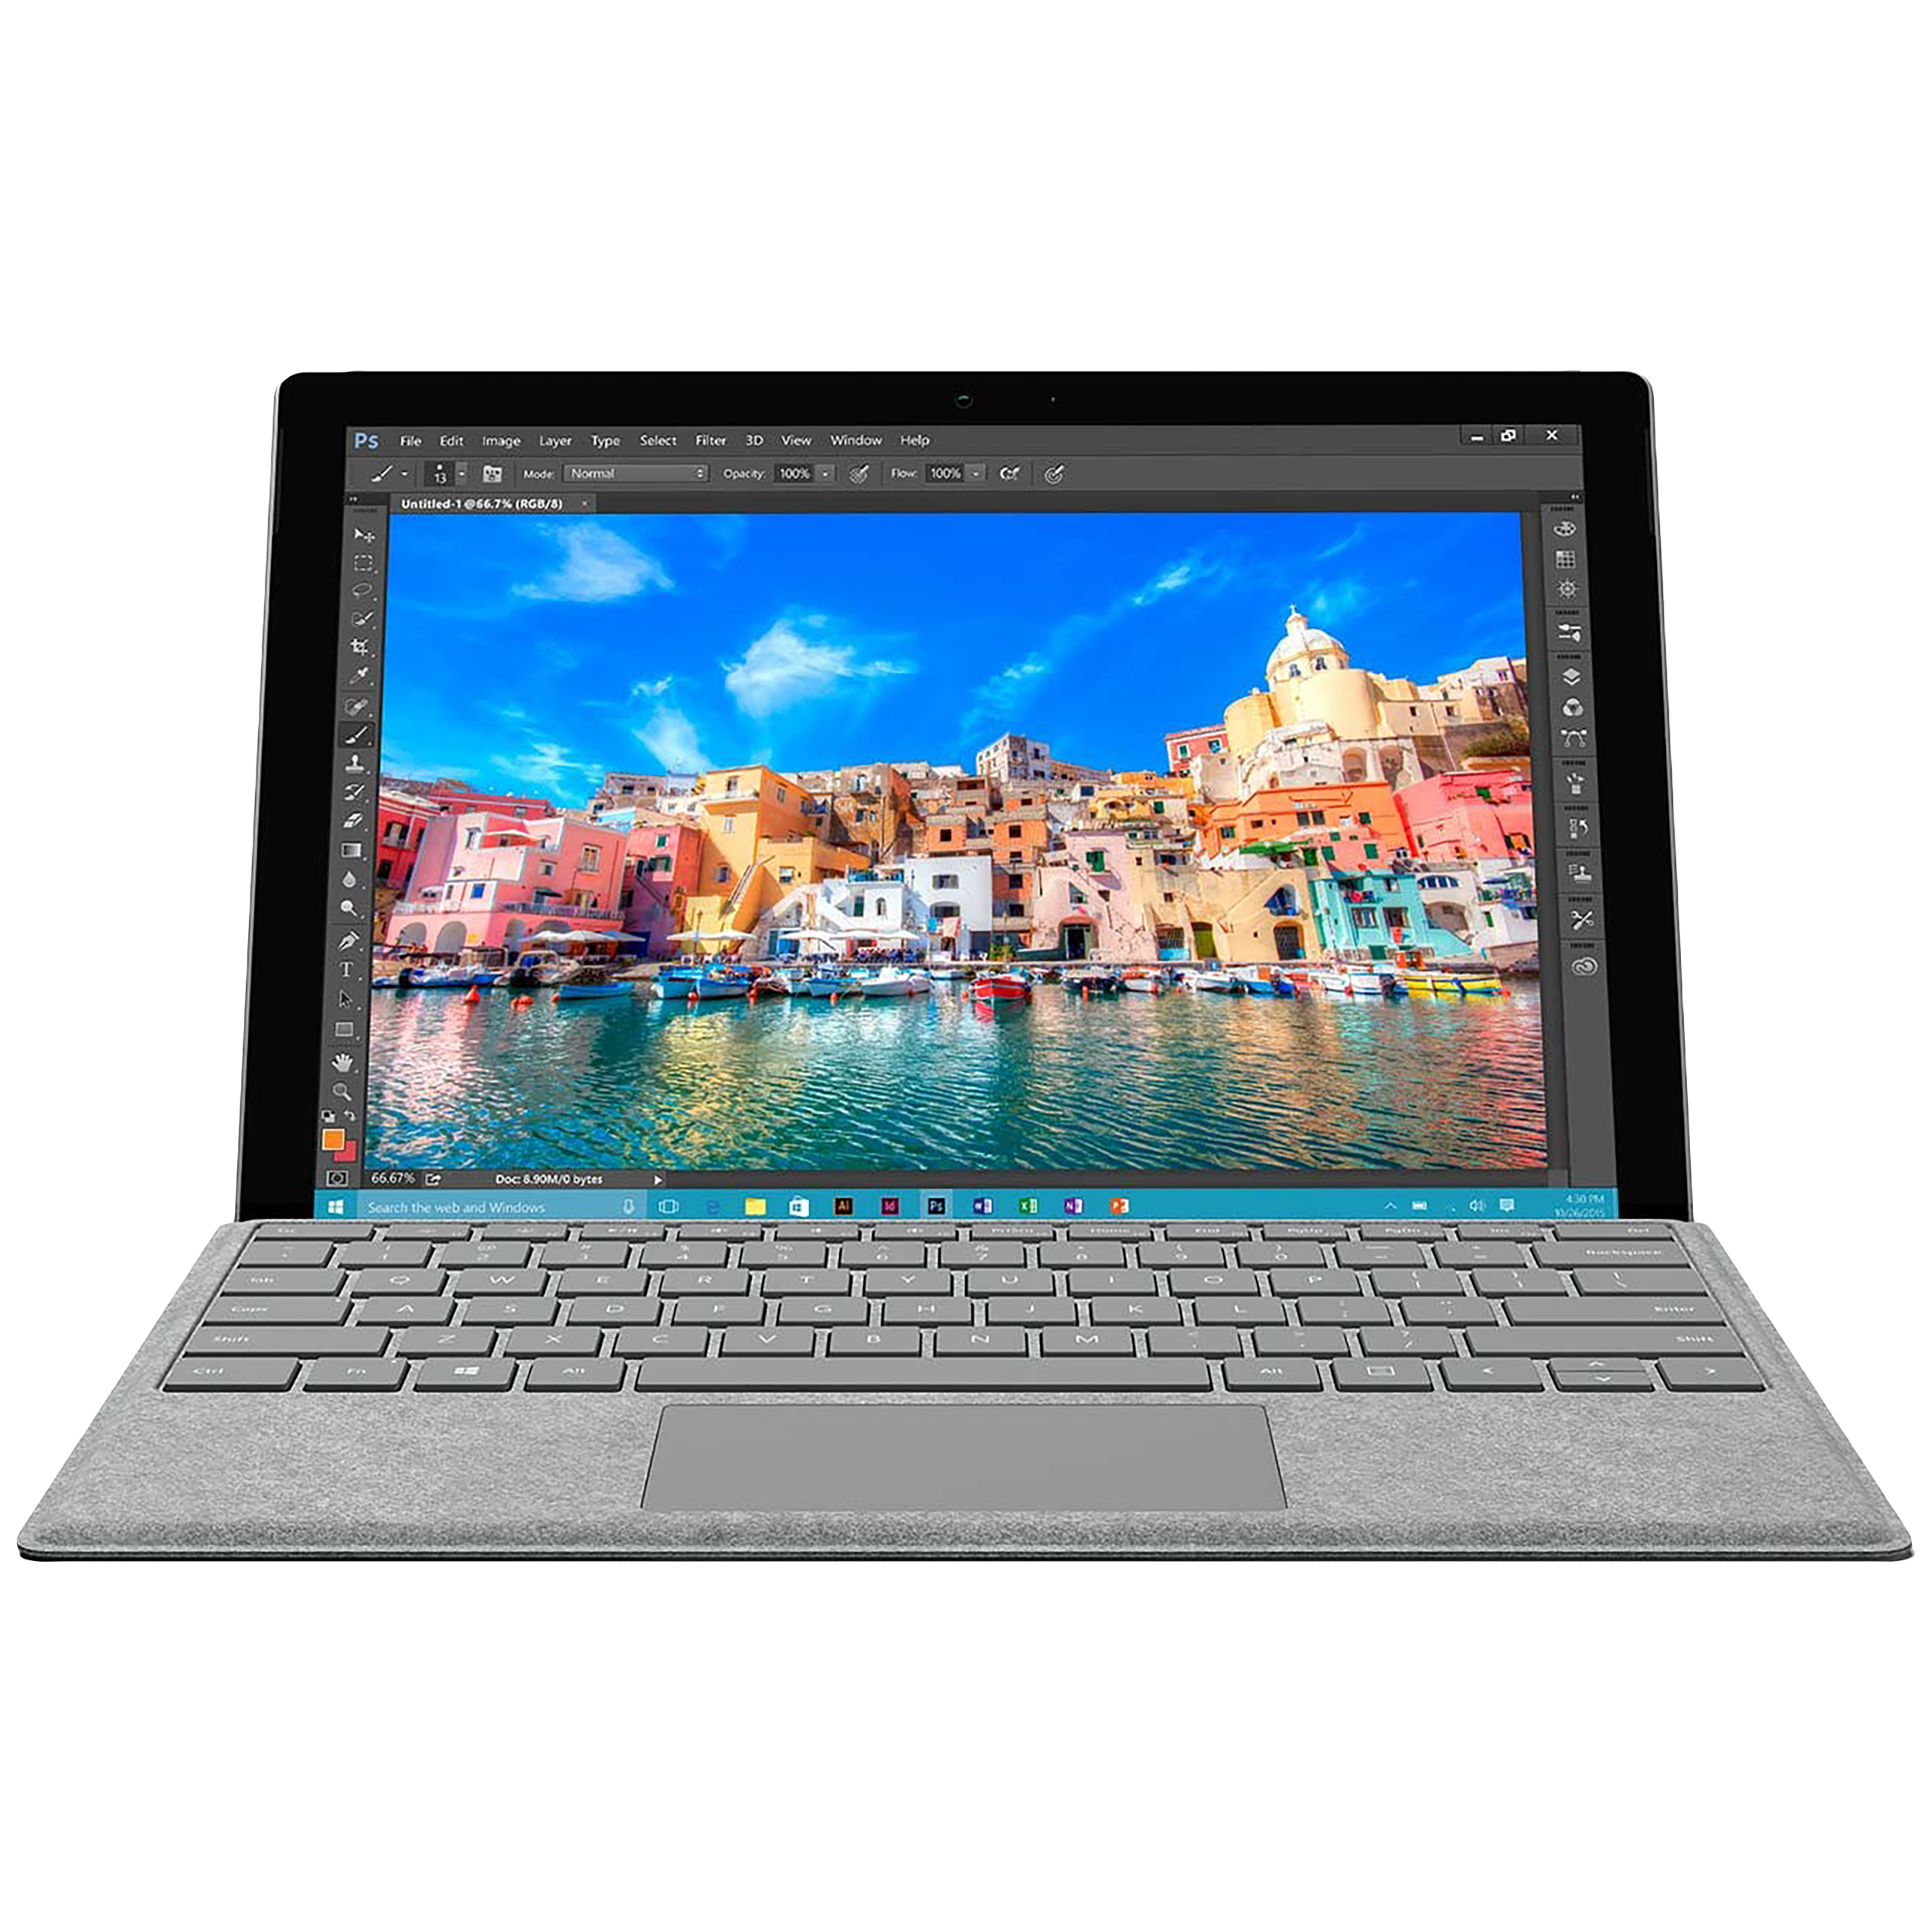 تبلت مایکروسافت مدل Surface Pro 4 - F به همراه کیبورد Signature Type Cover